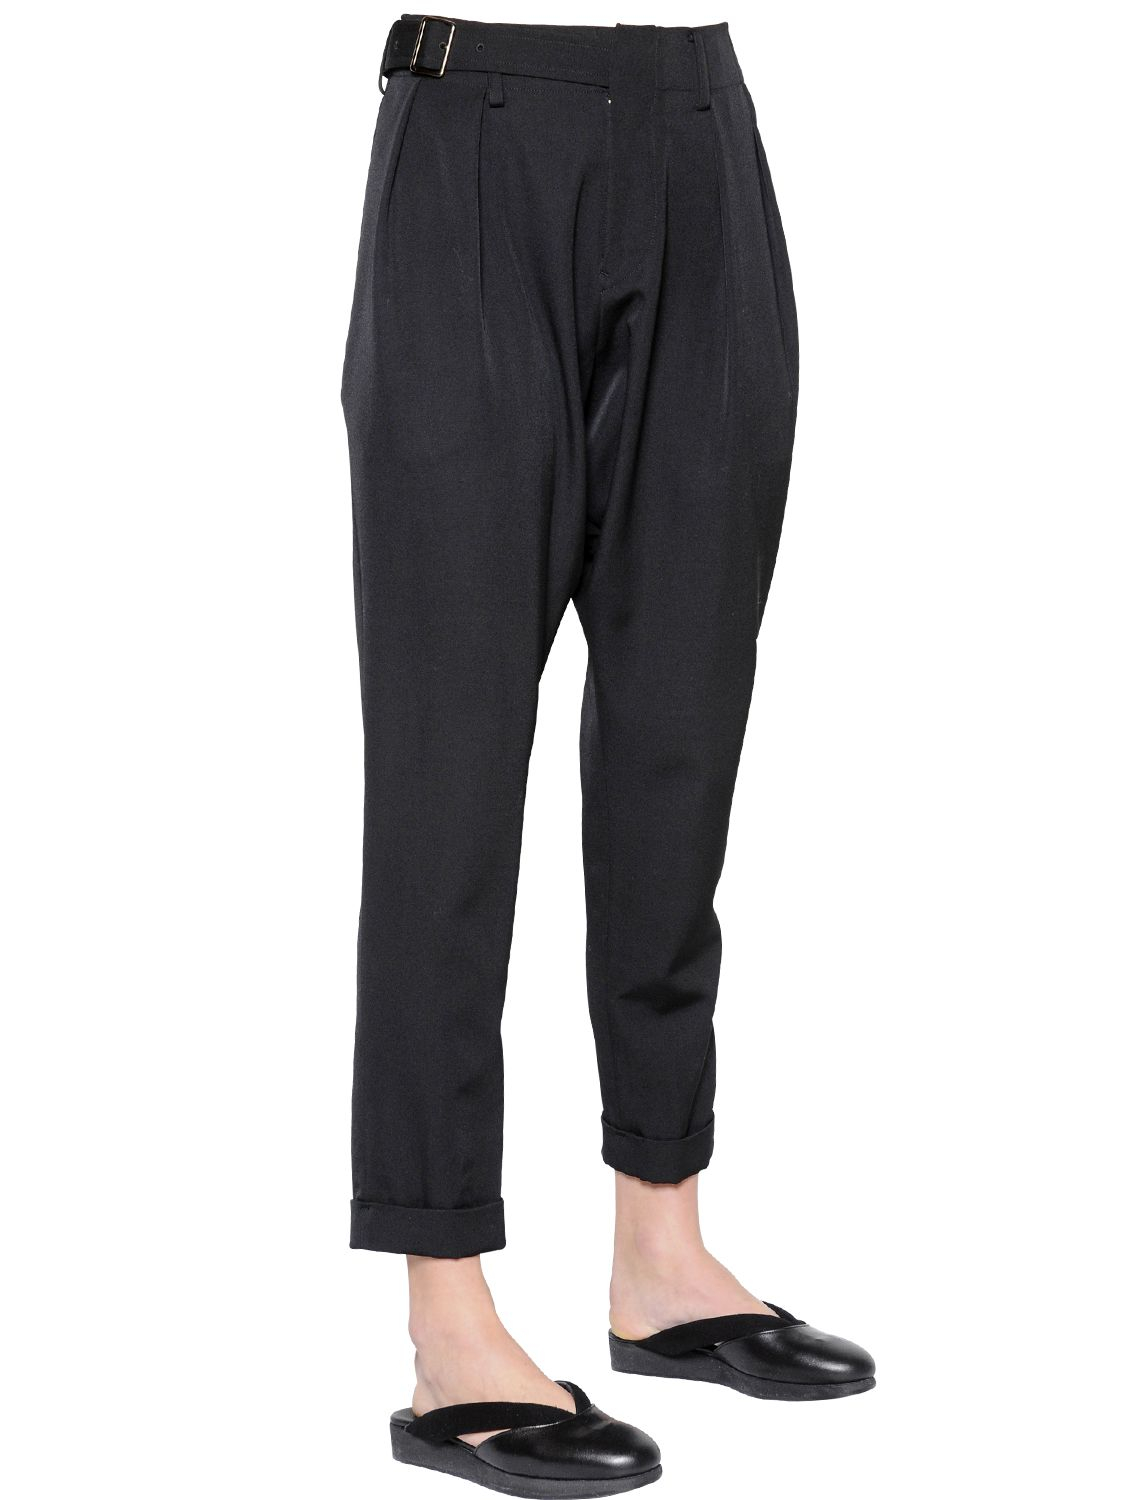 Yohji Yamamoto Wrinkle Wool Gabardine Pants in Black - Lyst